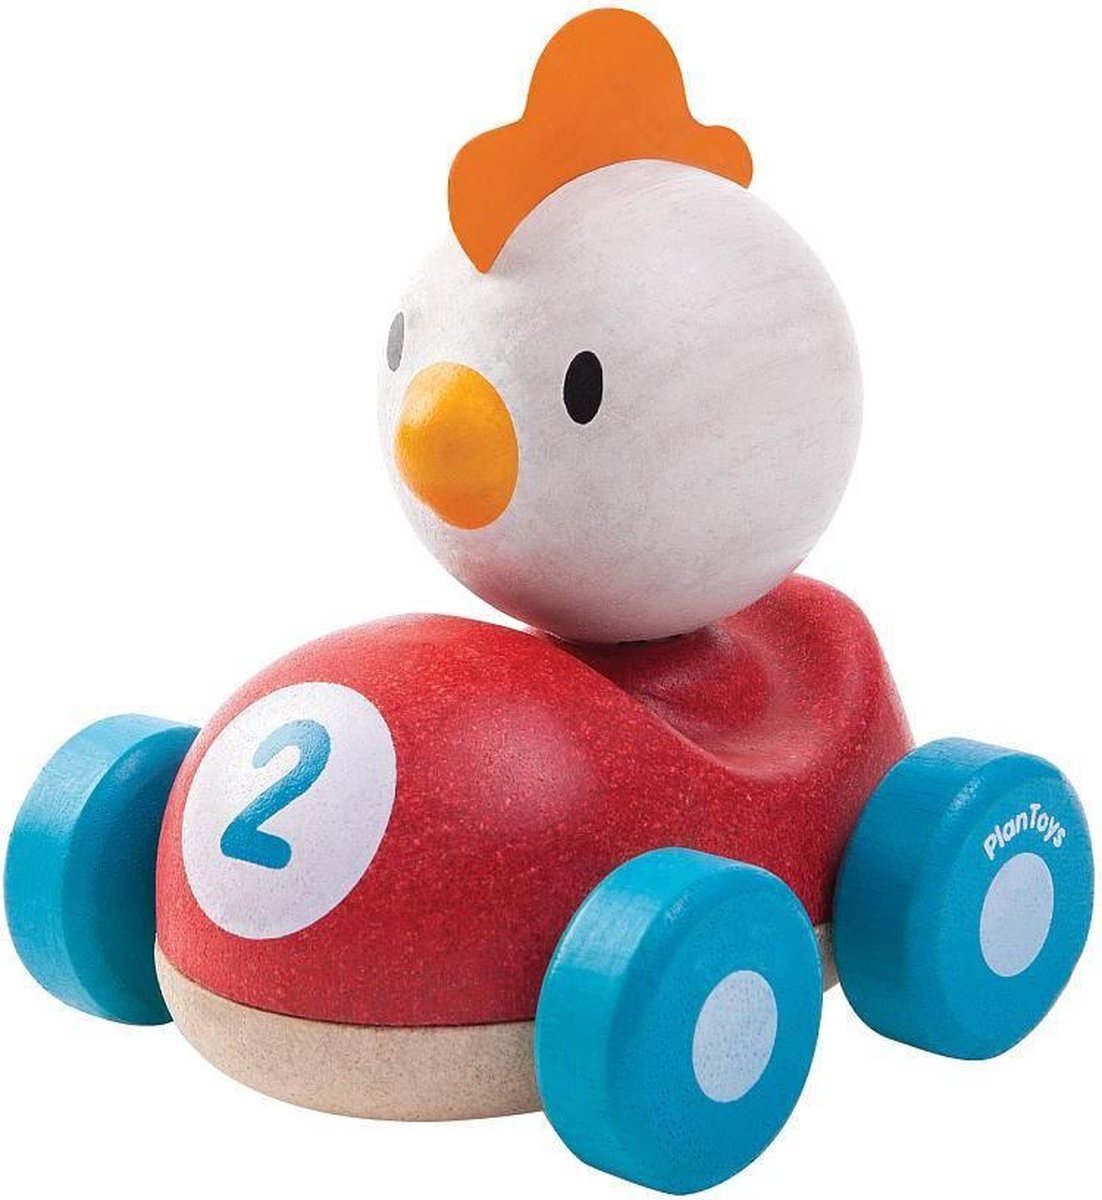 Plan Toys Chicken racer